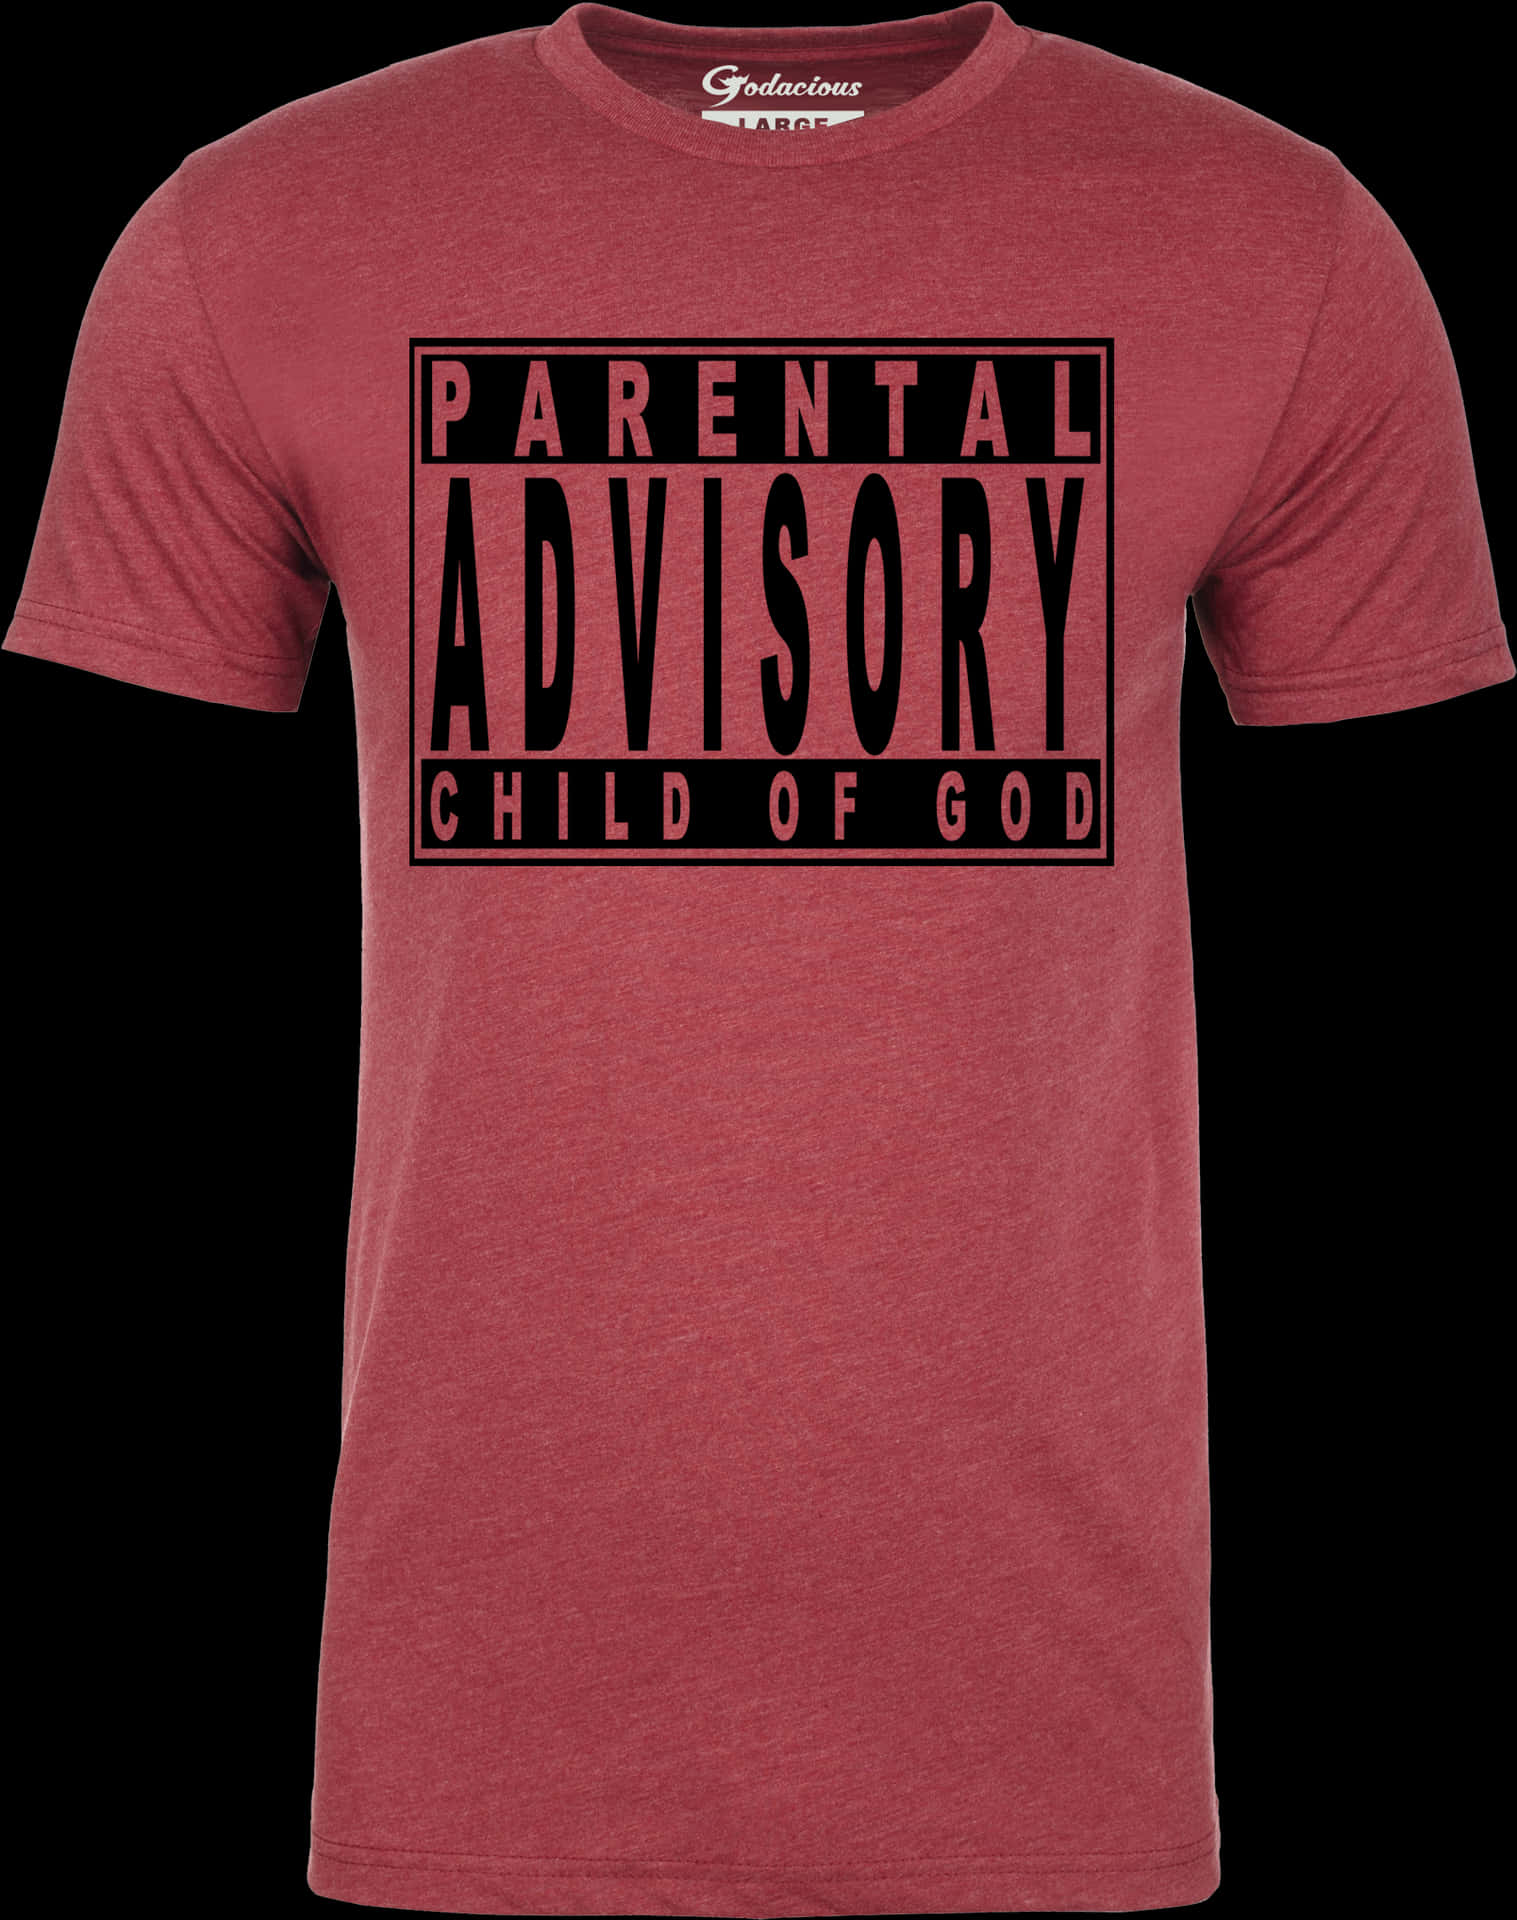 Parental Advisory Childof God Tshirt PNG